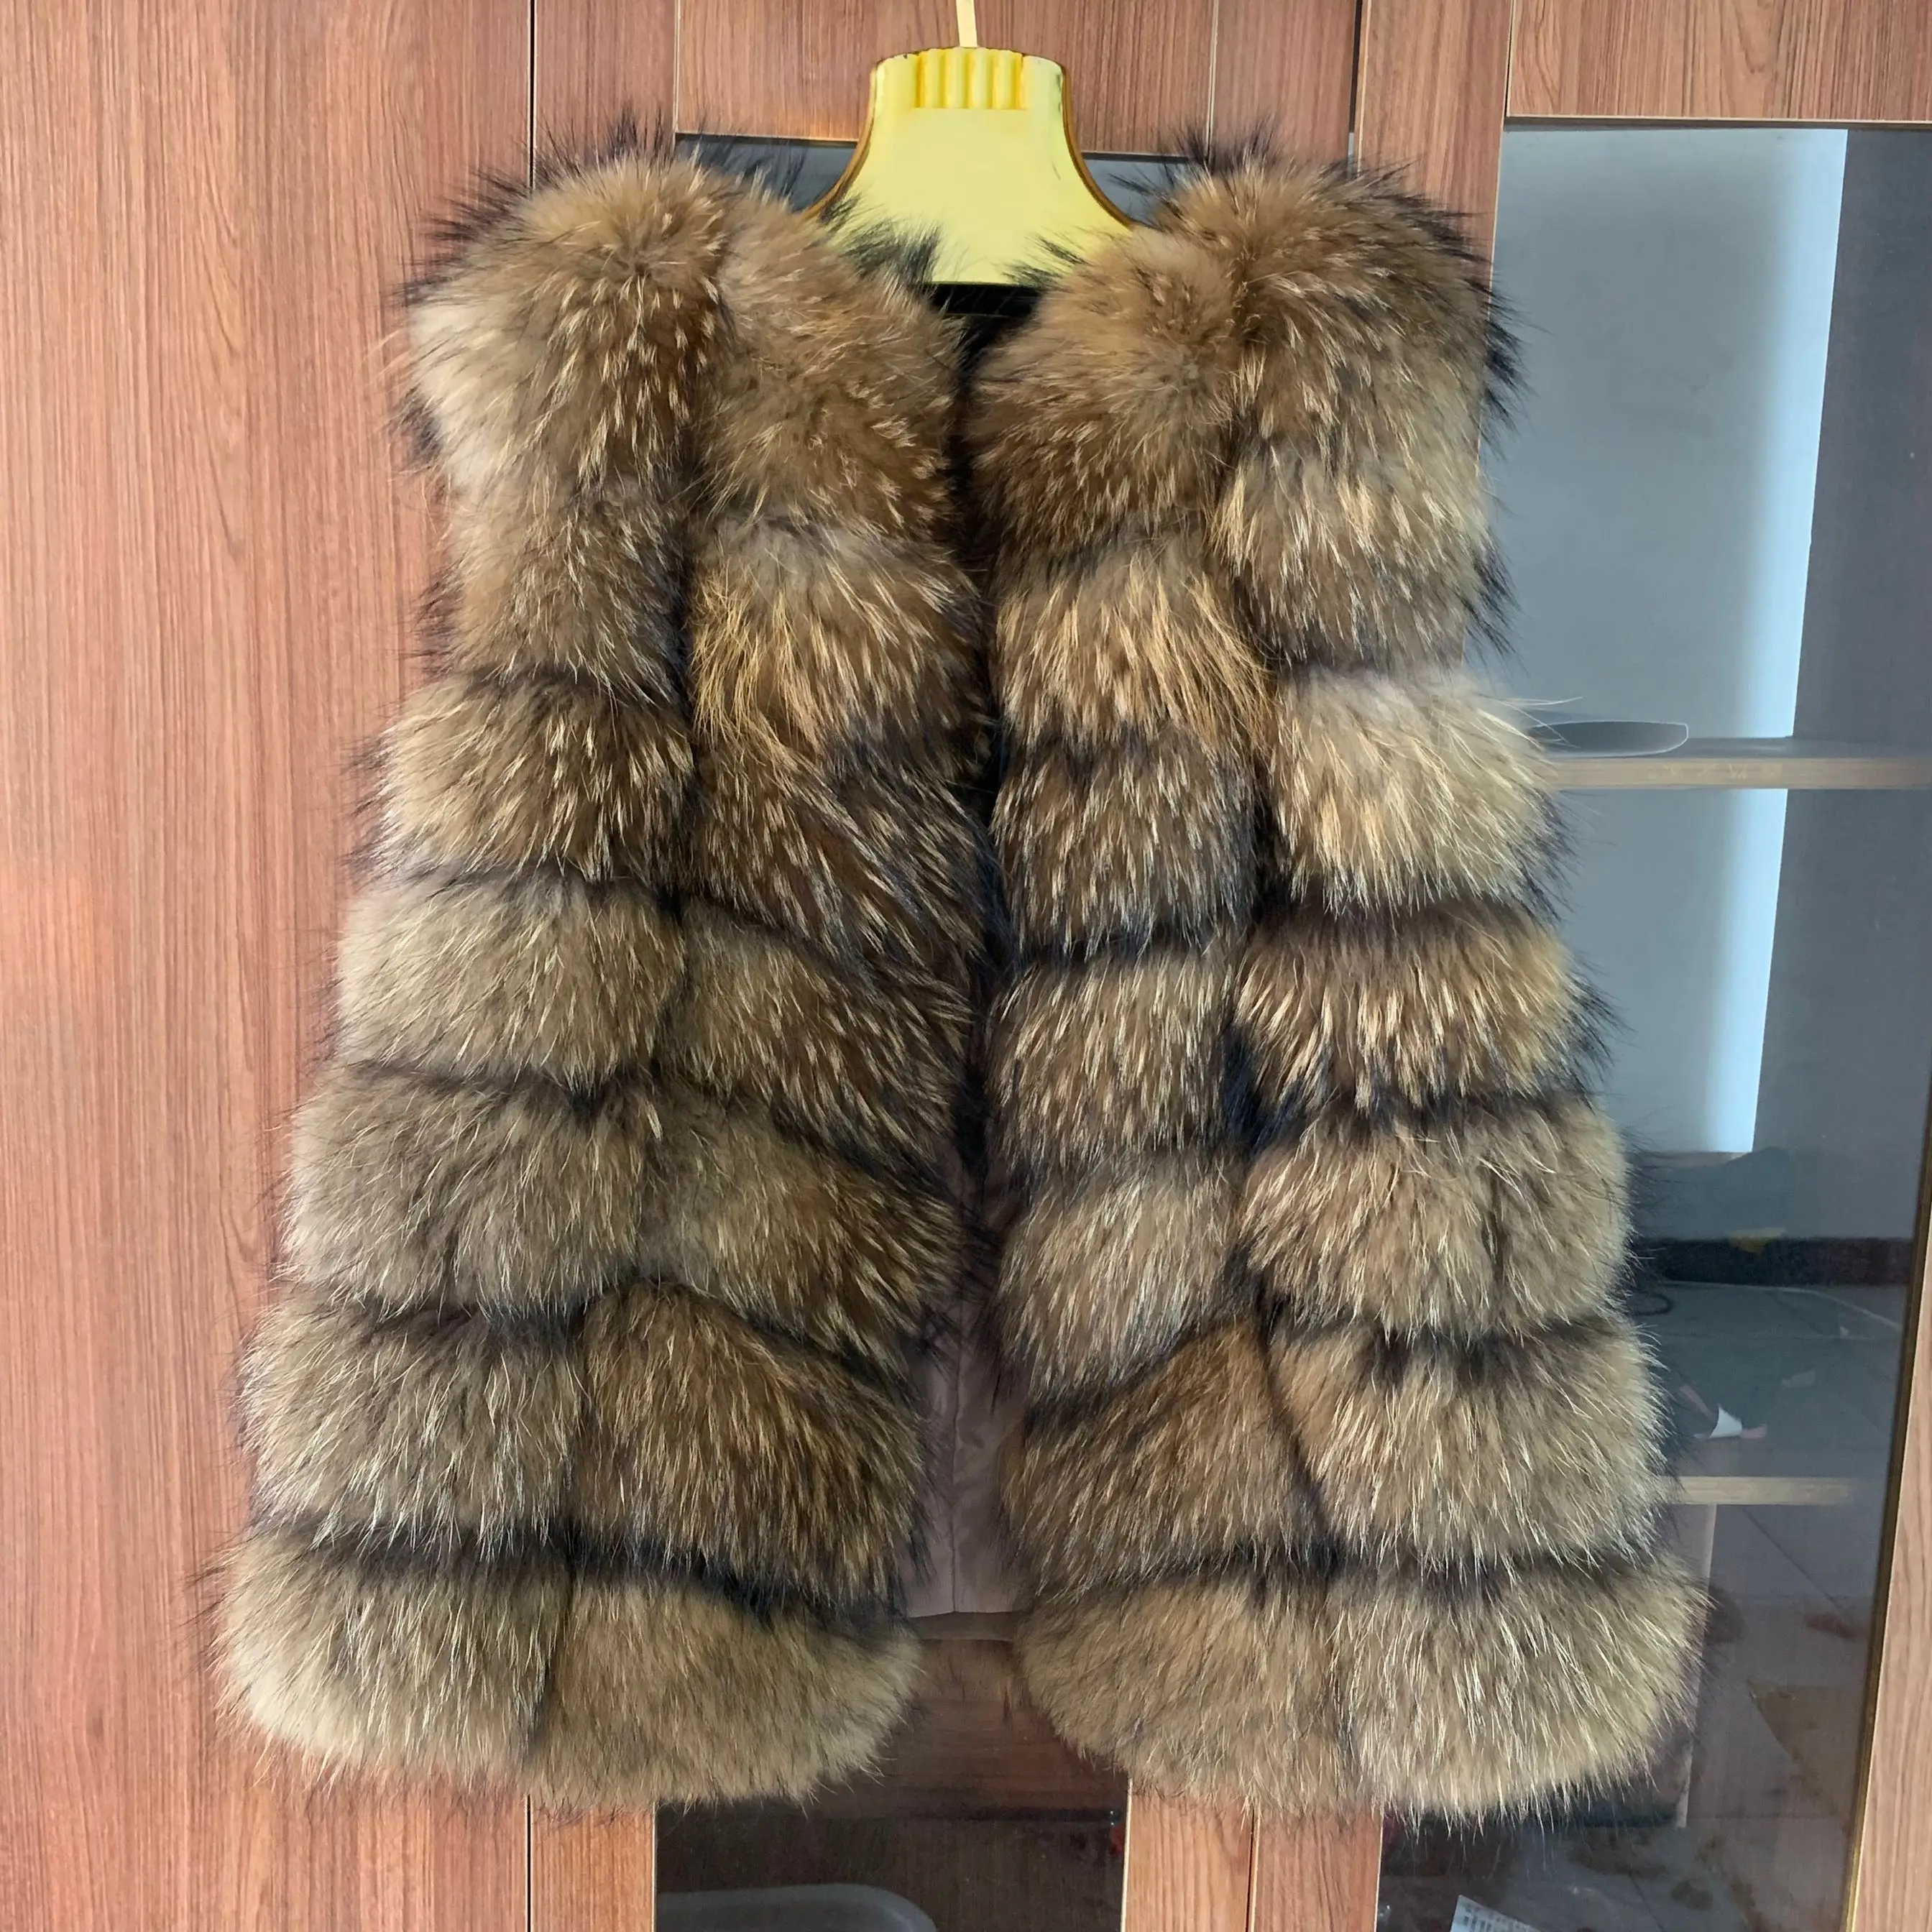 Fox fur coat women Autumn and winter vests genuine fur coat Natural fur Silver fox jacket Raccoon fur vest jacket free shipping enlarge